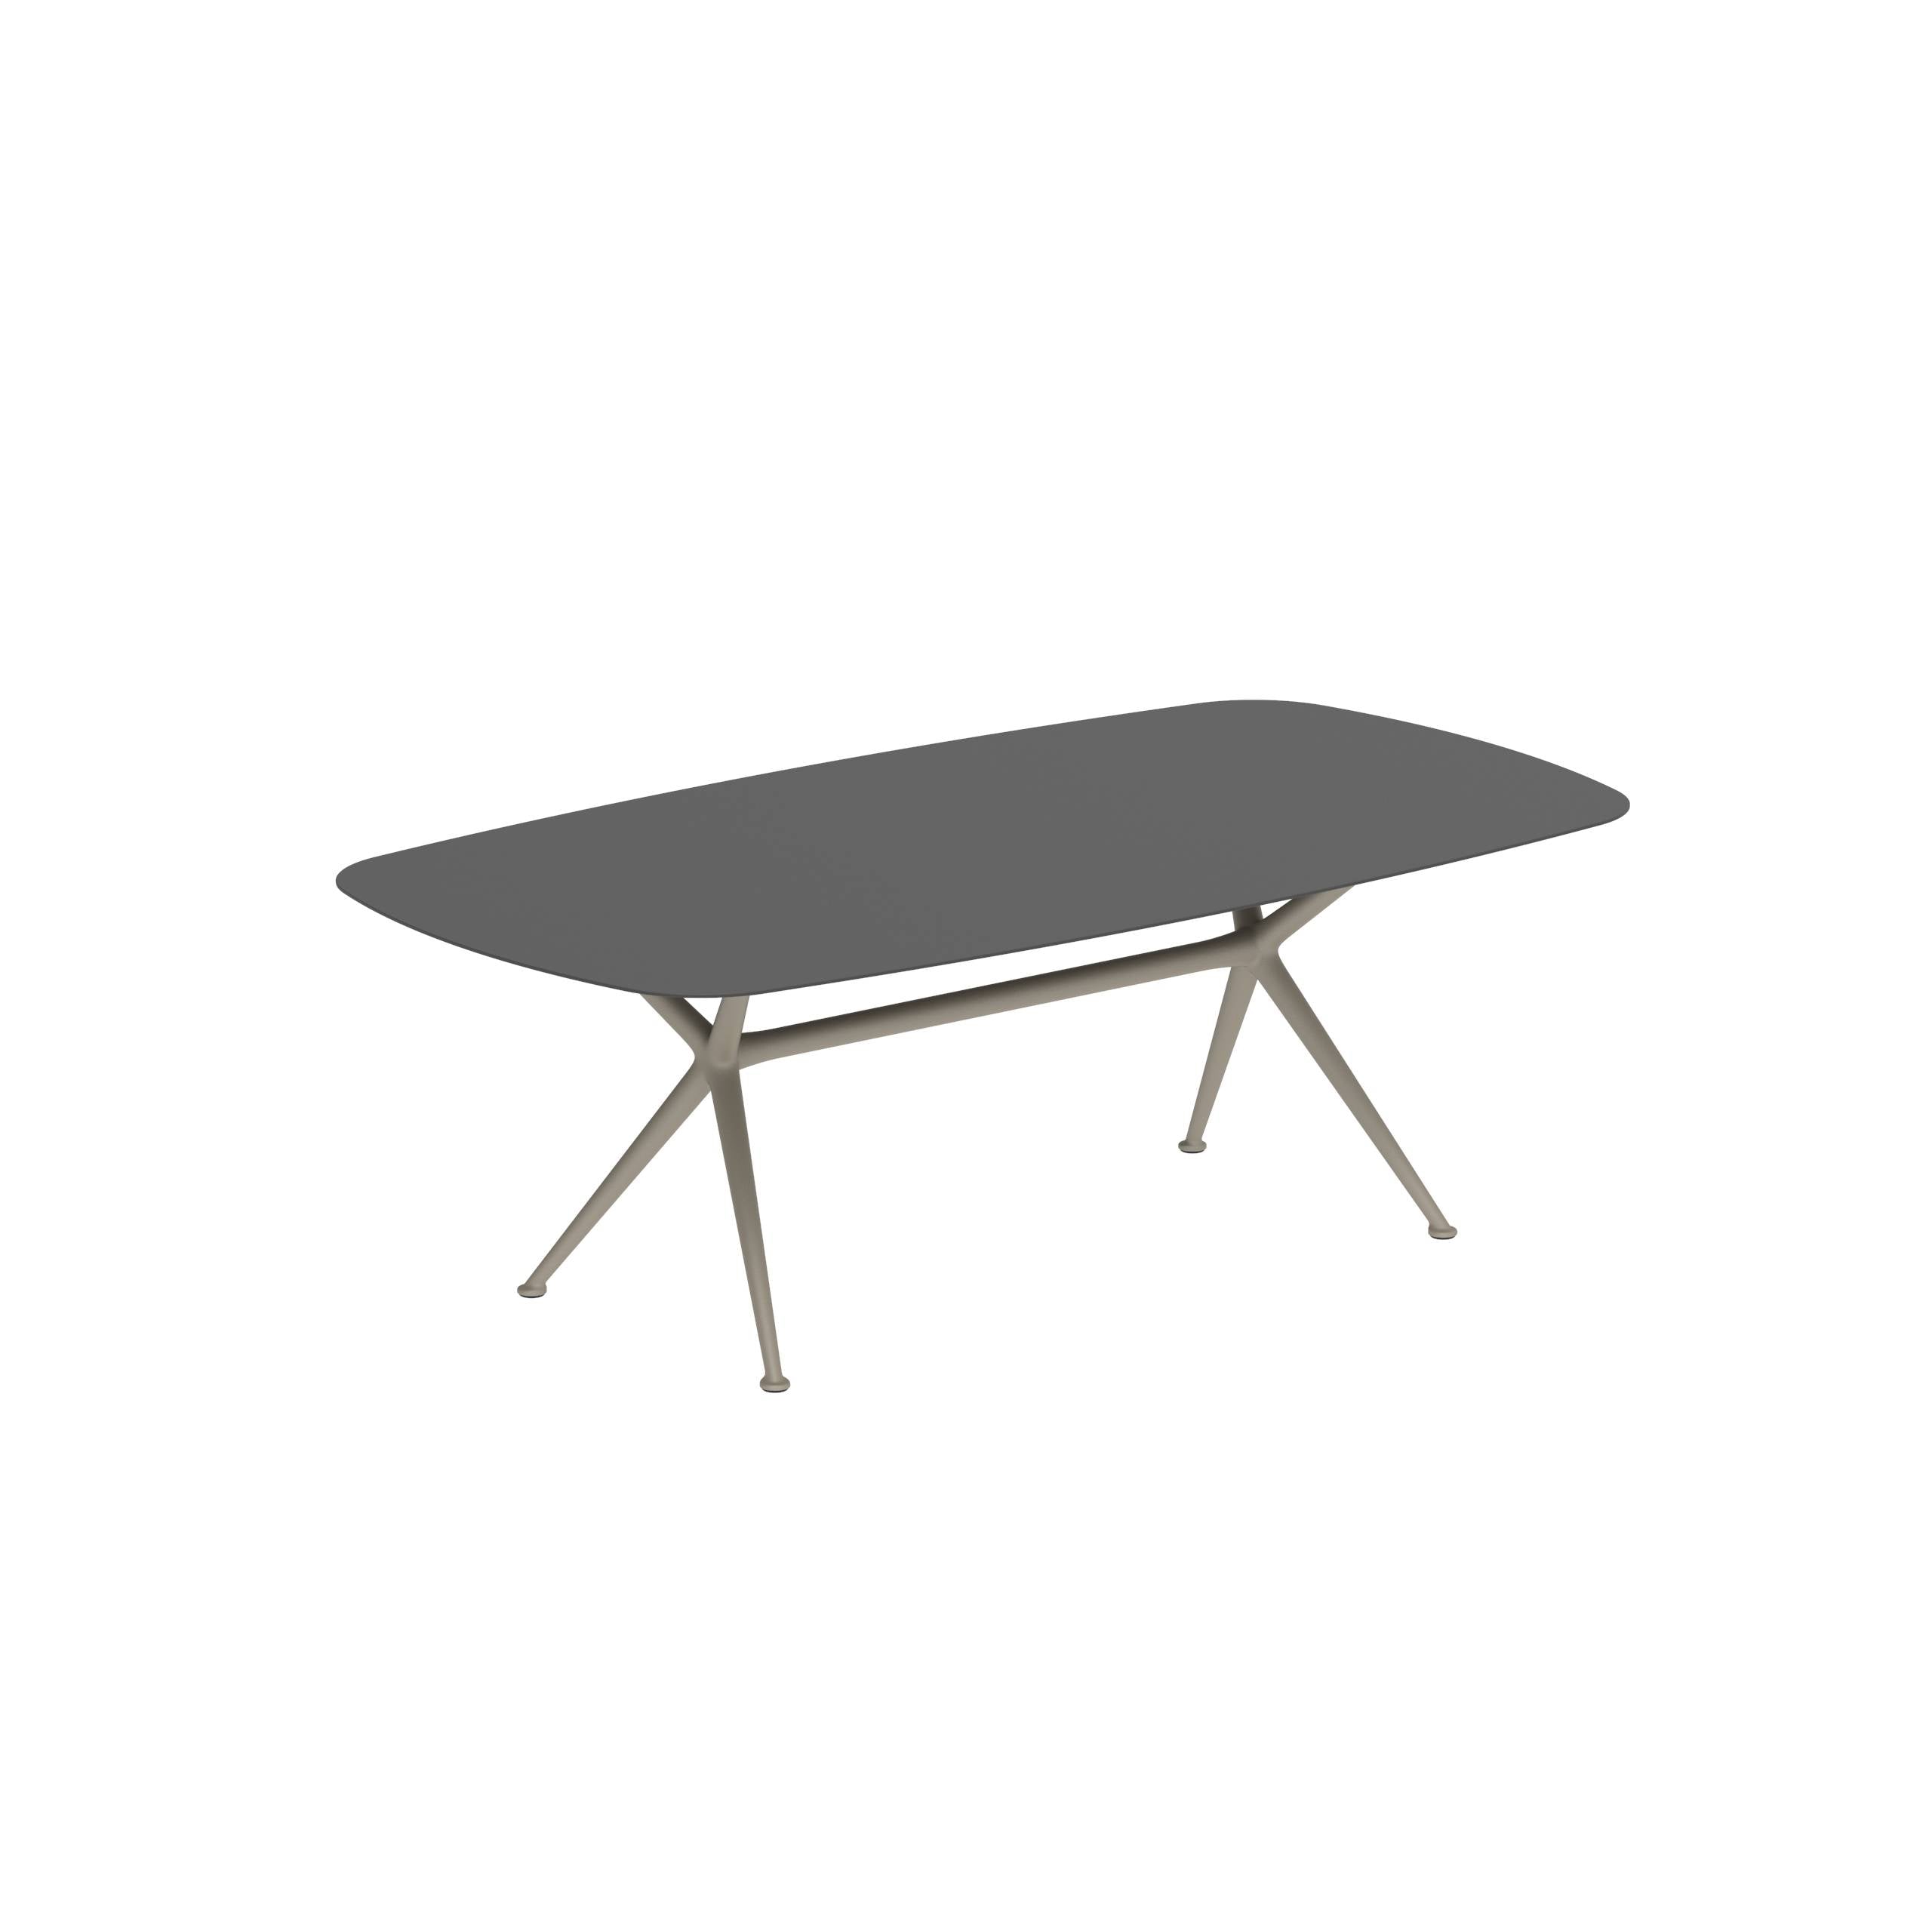 Exes Table 220x120cm Alu Legs Sand - Table Top Ceramic Black